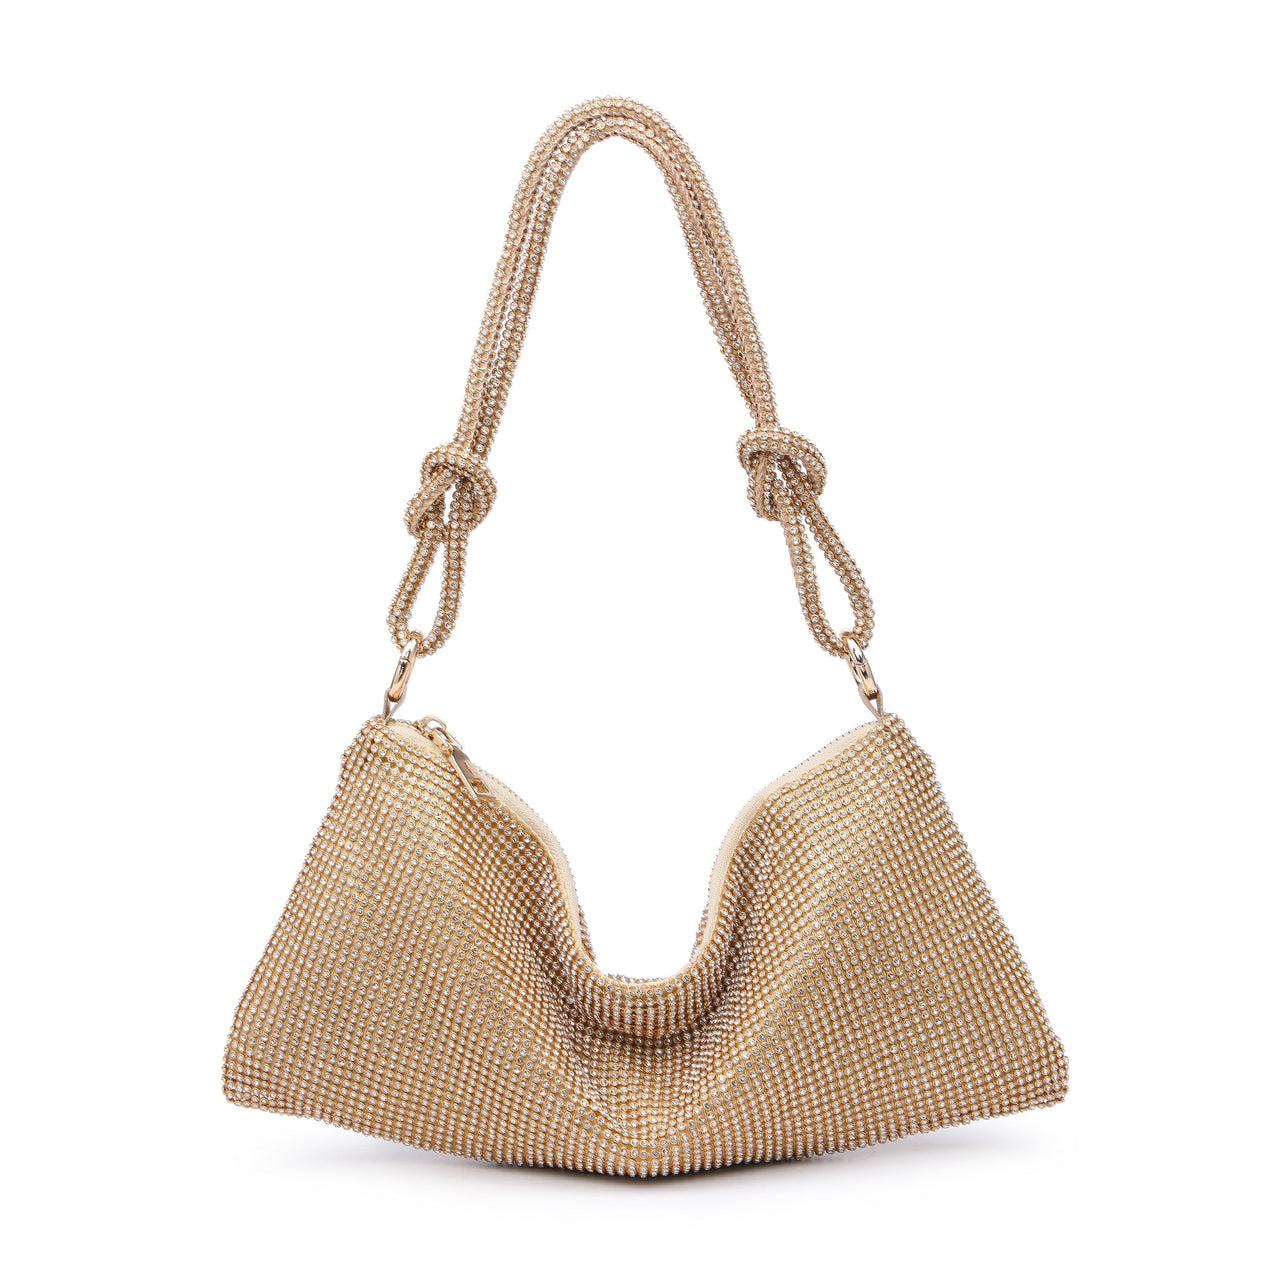 Paris Handbag Gold, Evening Bag by Urban Expressions | LIT Boutique